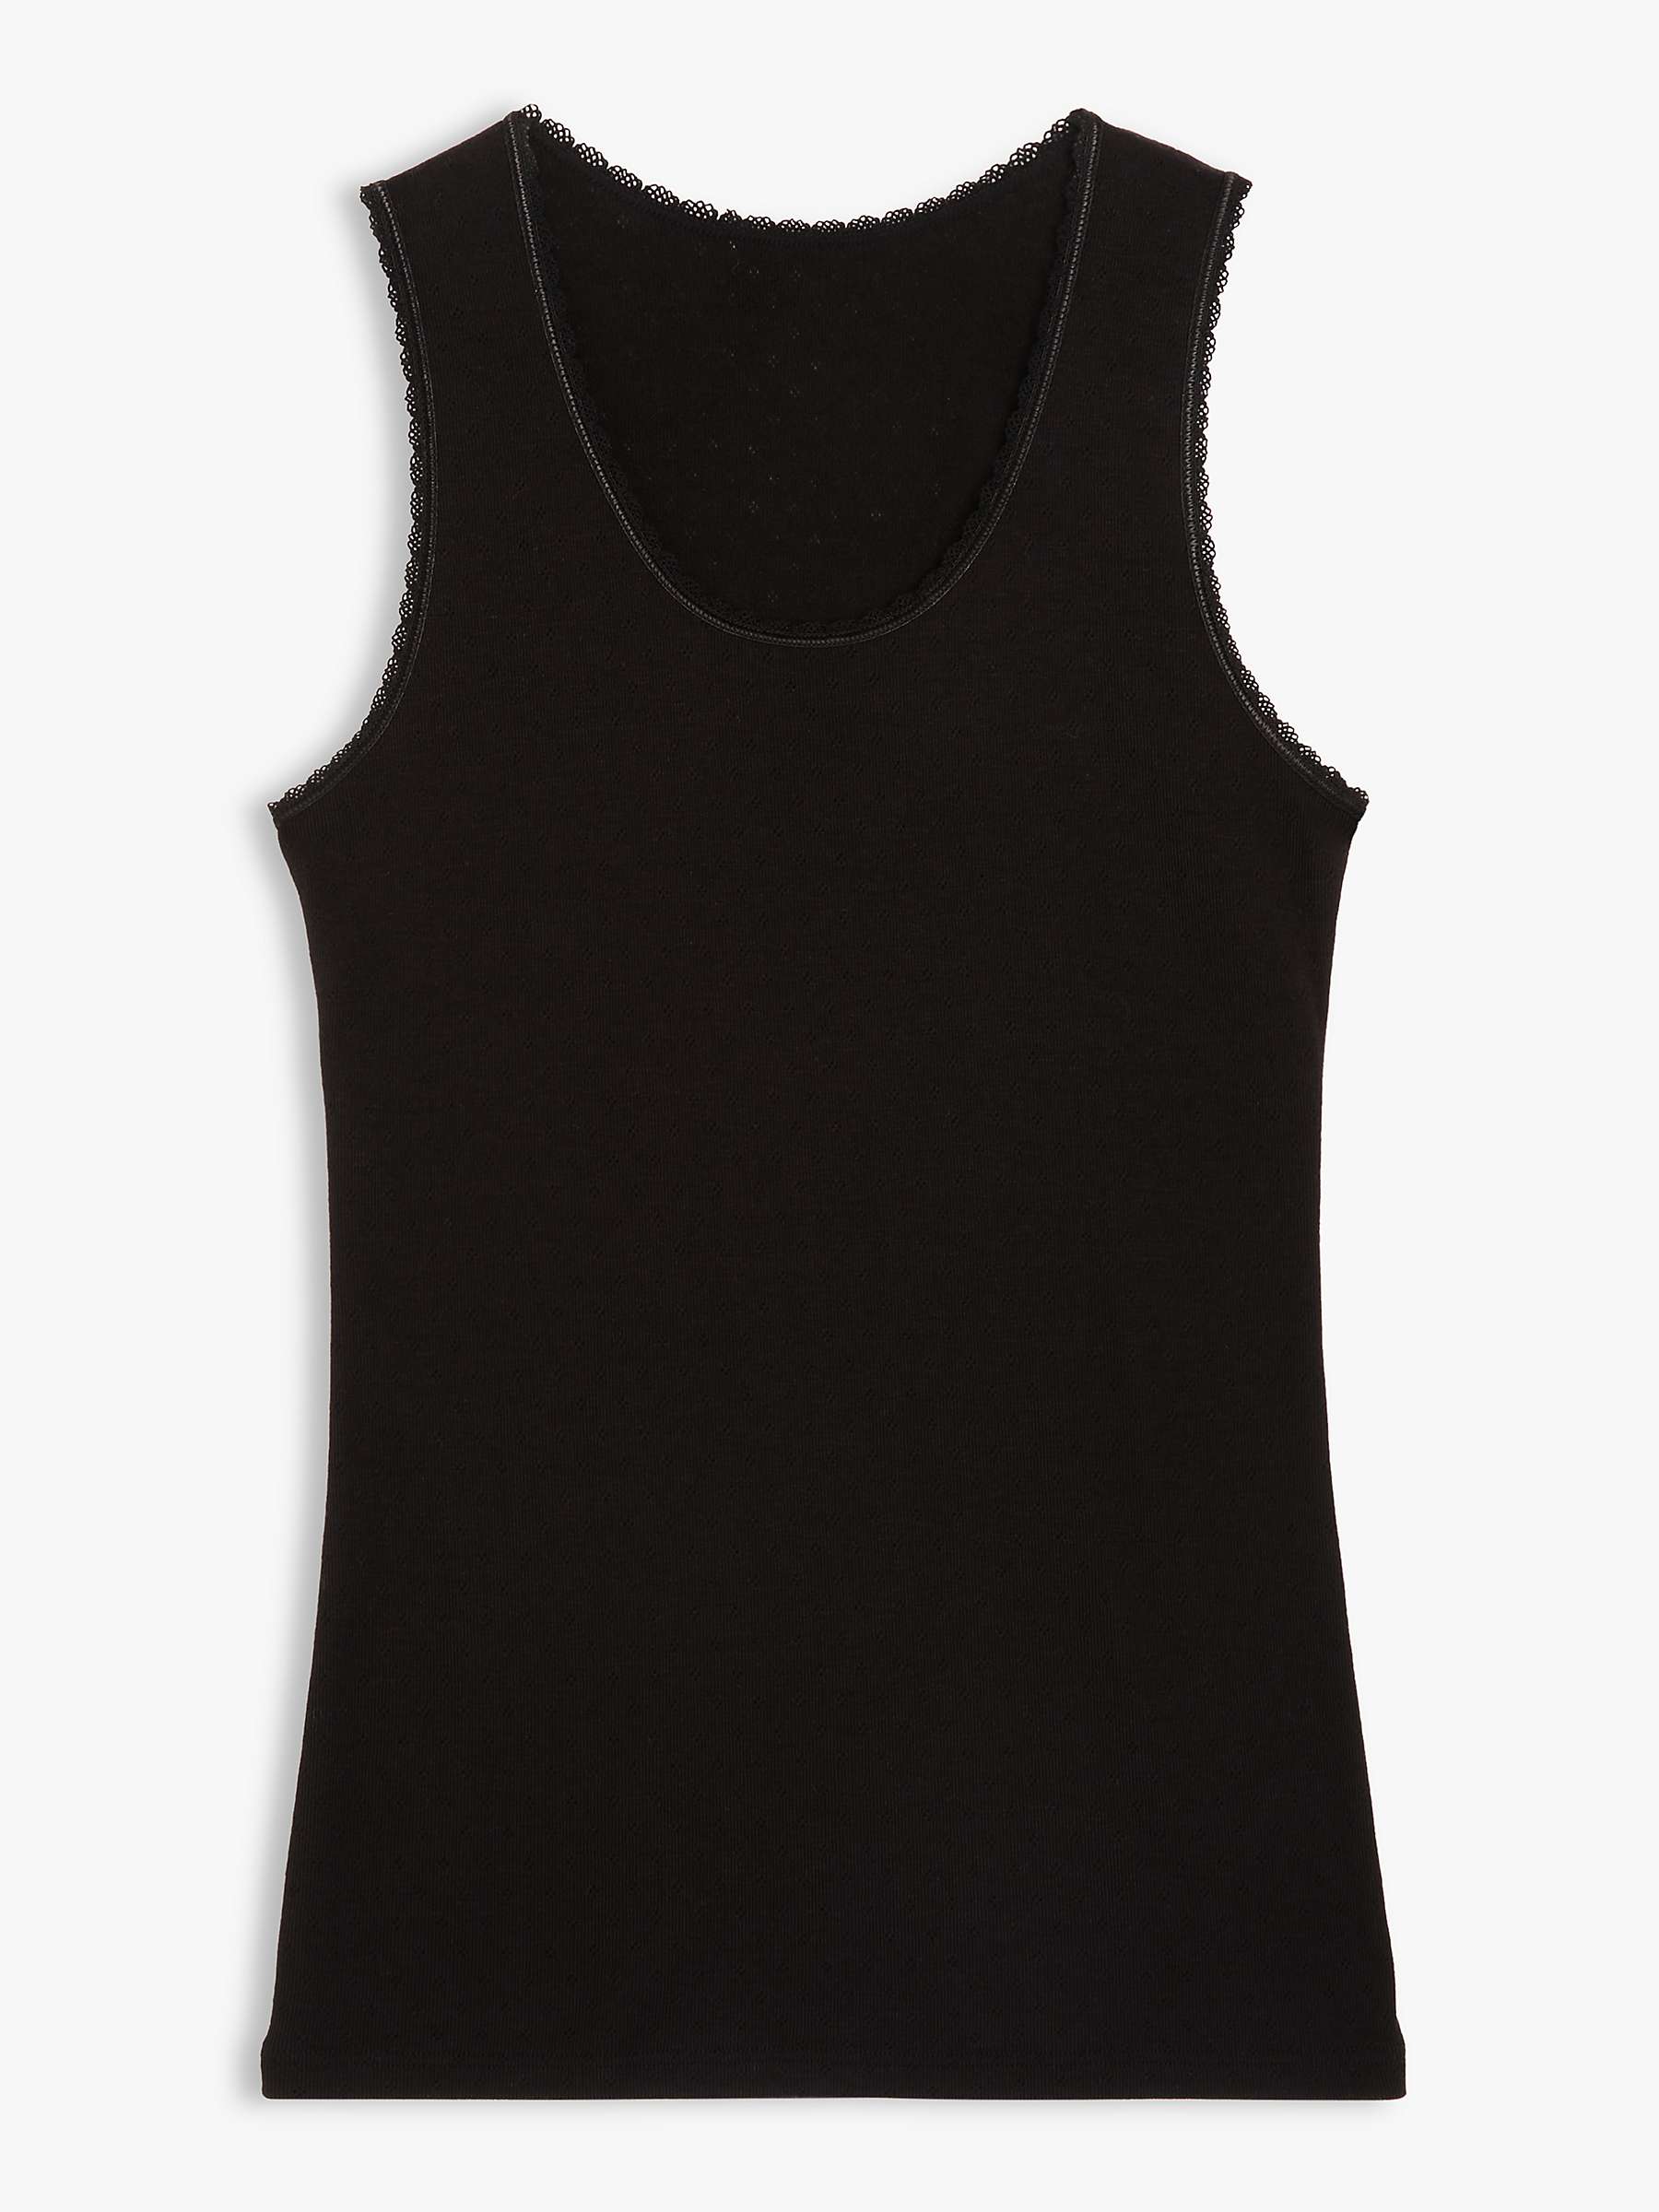 John Lewis Thermal Vest Top, Black at John Lewis & Partners